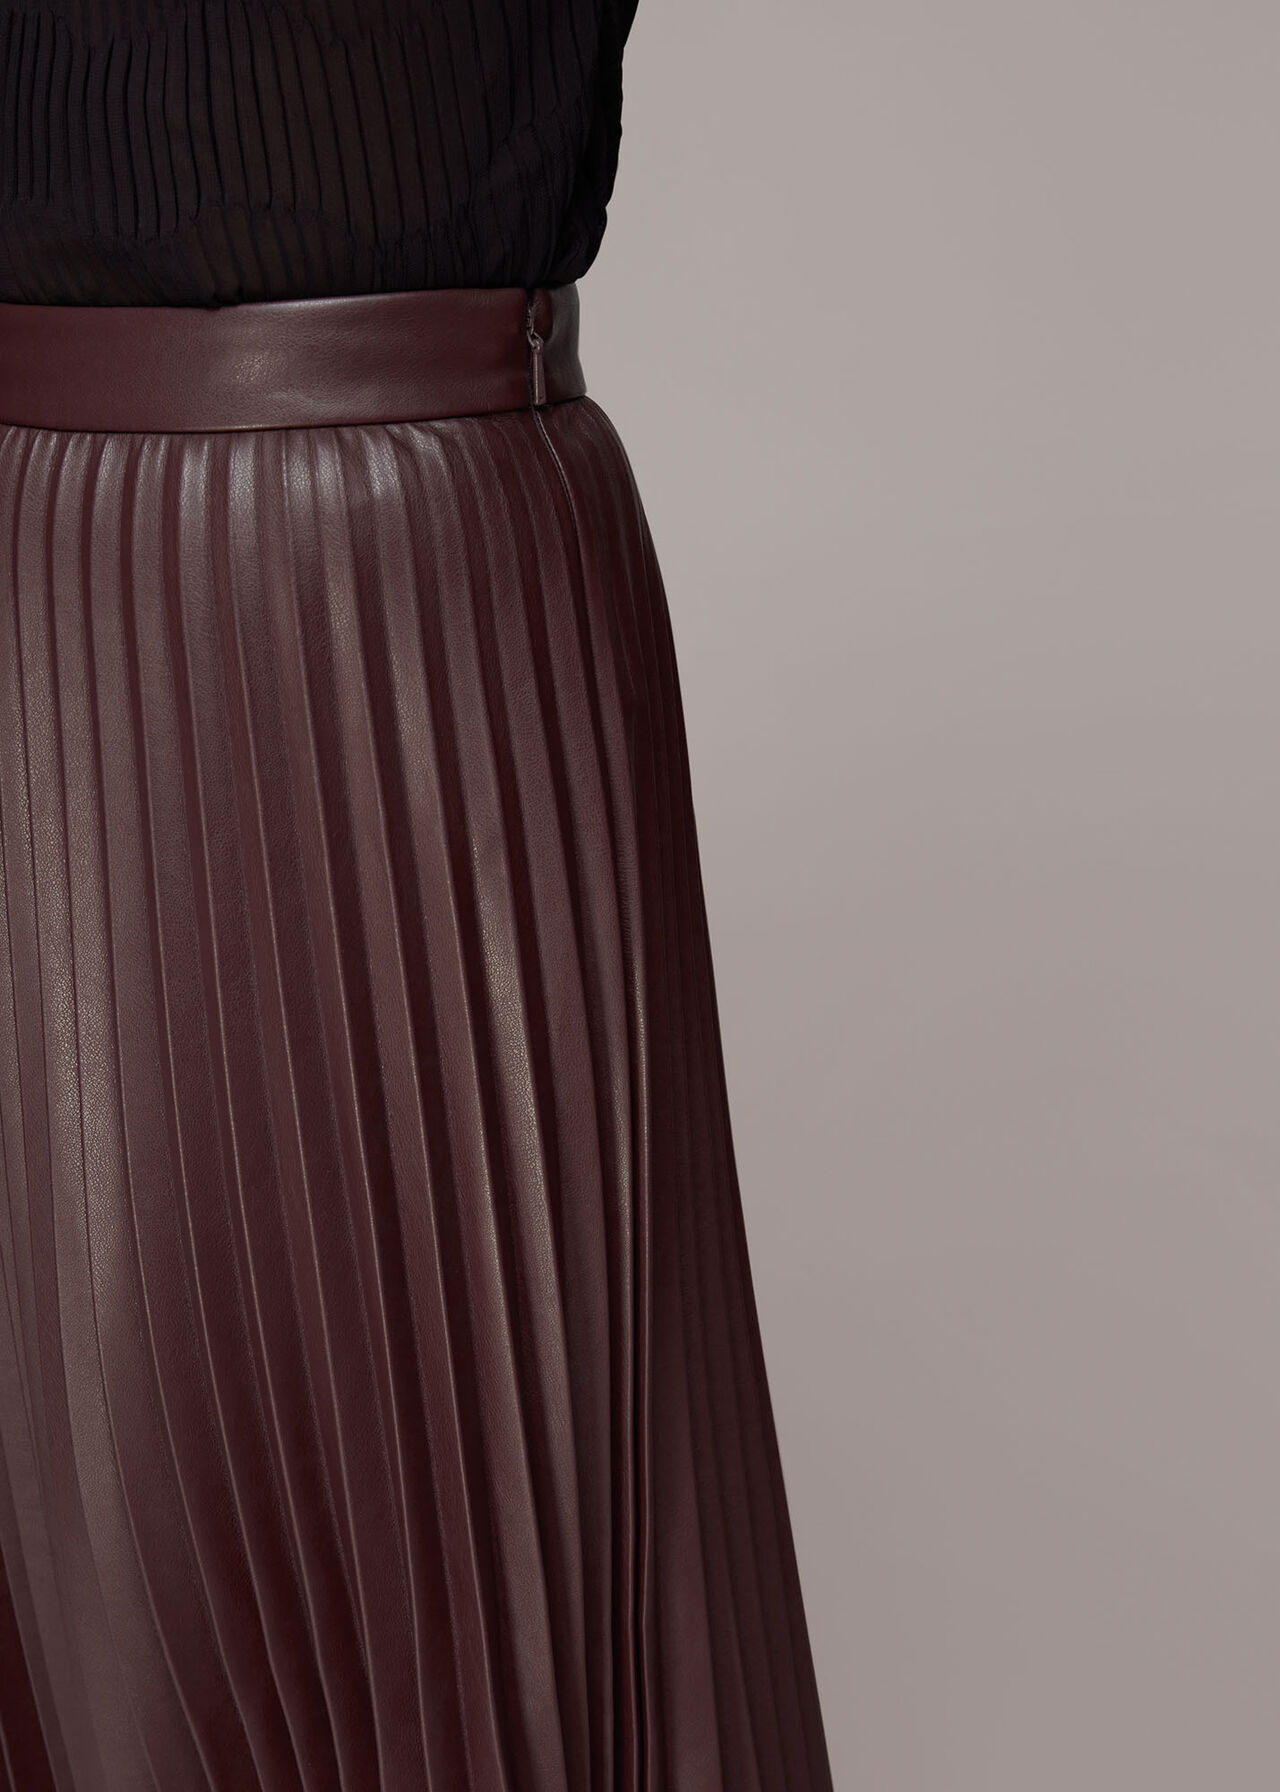 Chocolate Pleat Pu Leather Skirt | WHISTLES